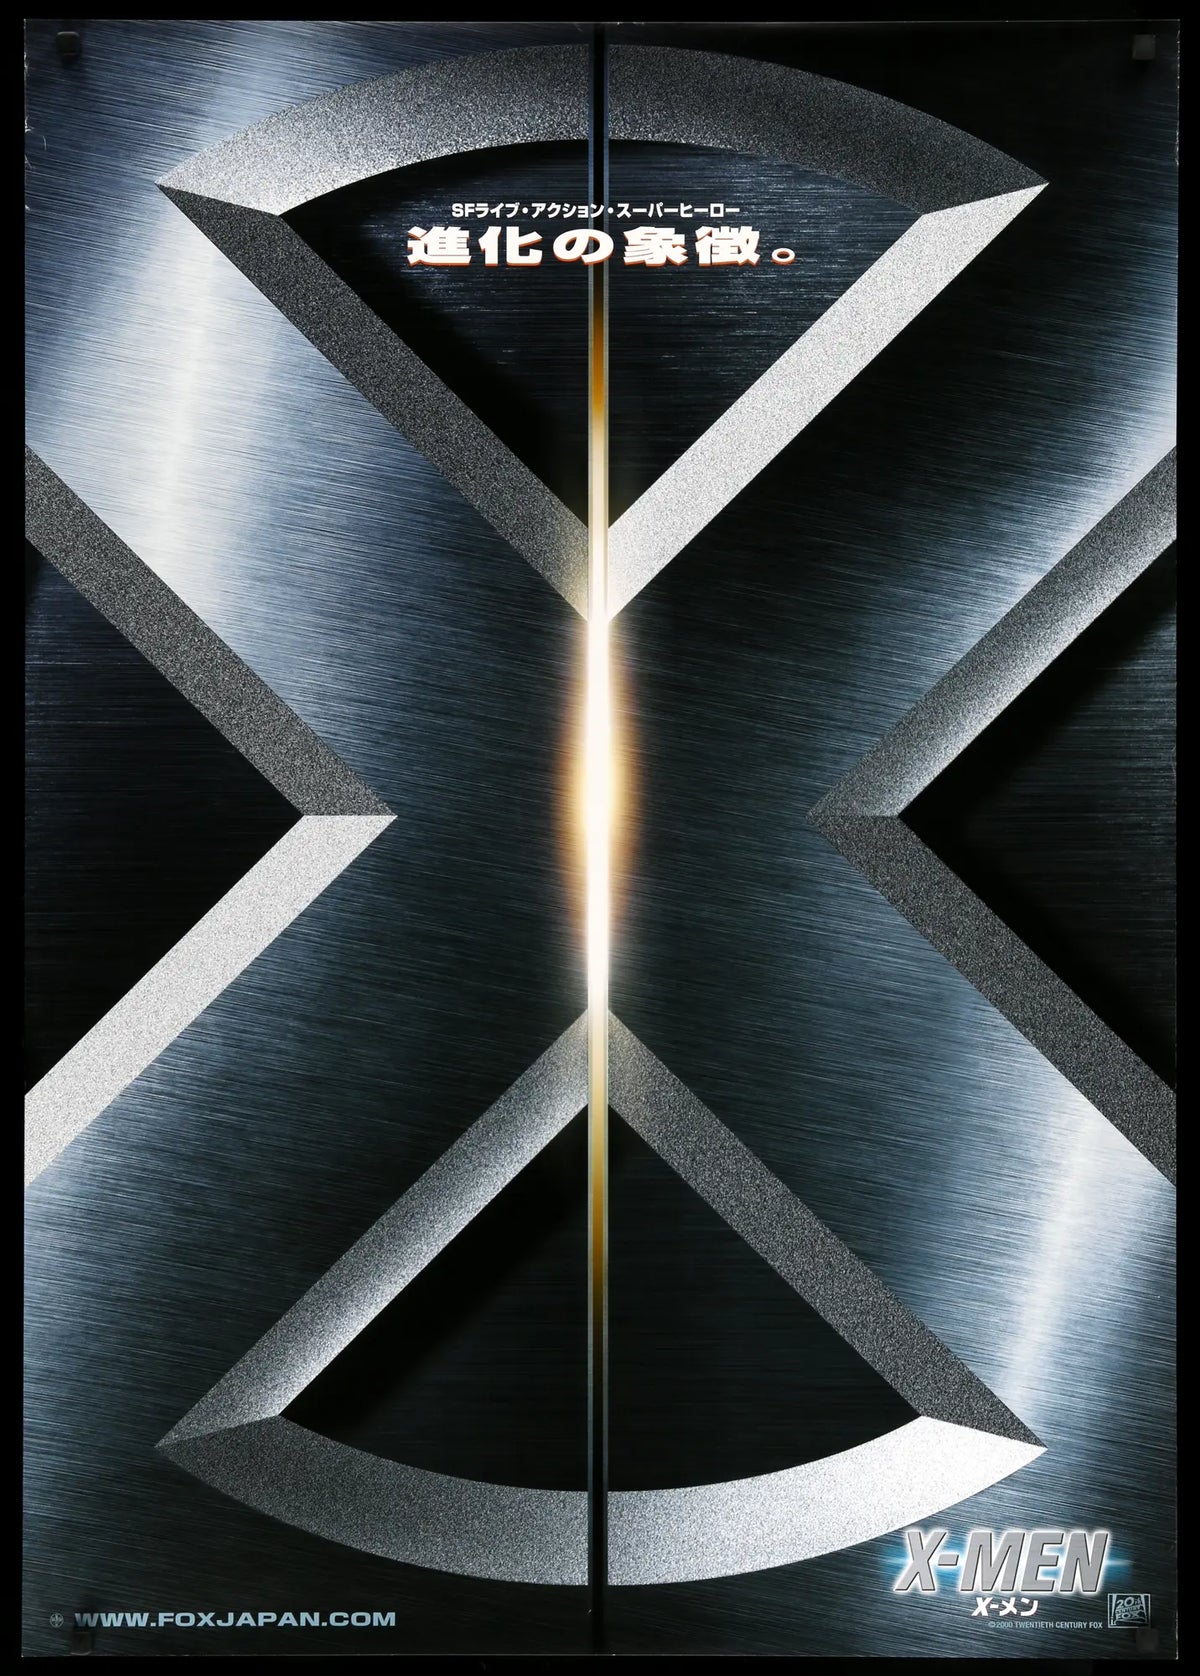 X-Men (2000) original movie poster for sale at Original Film Art